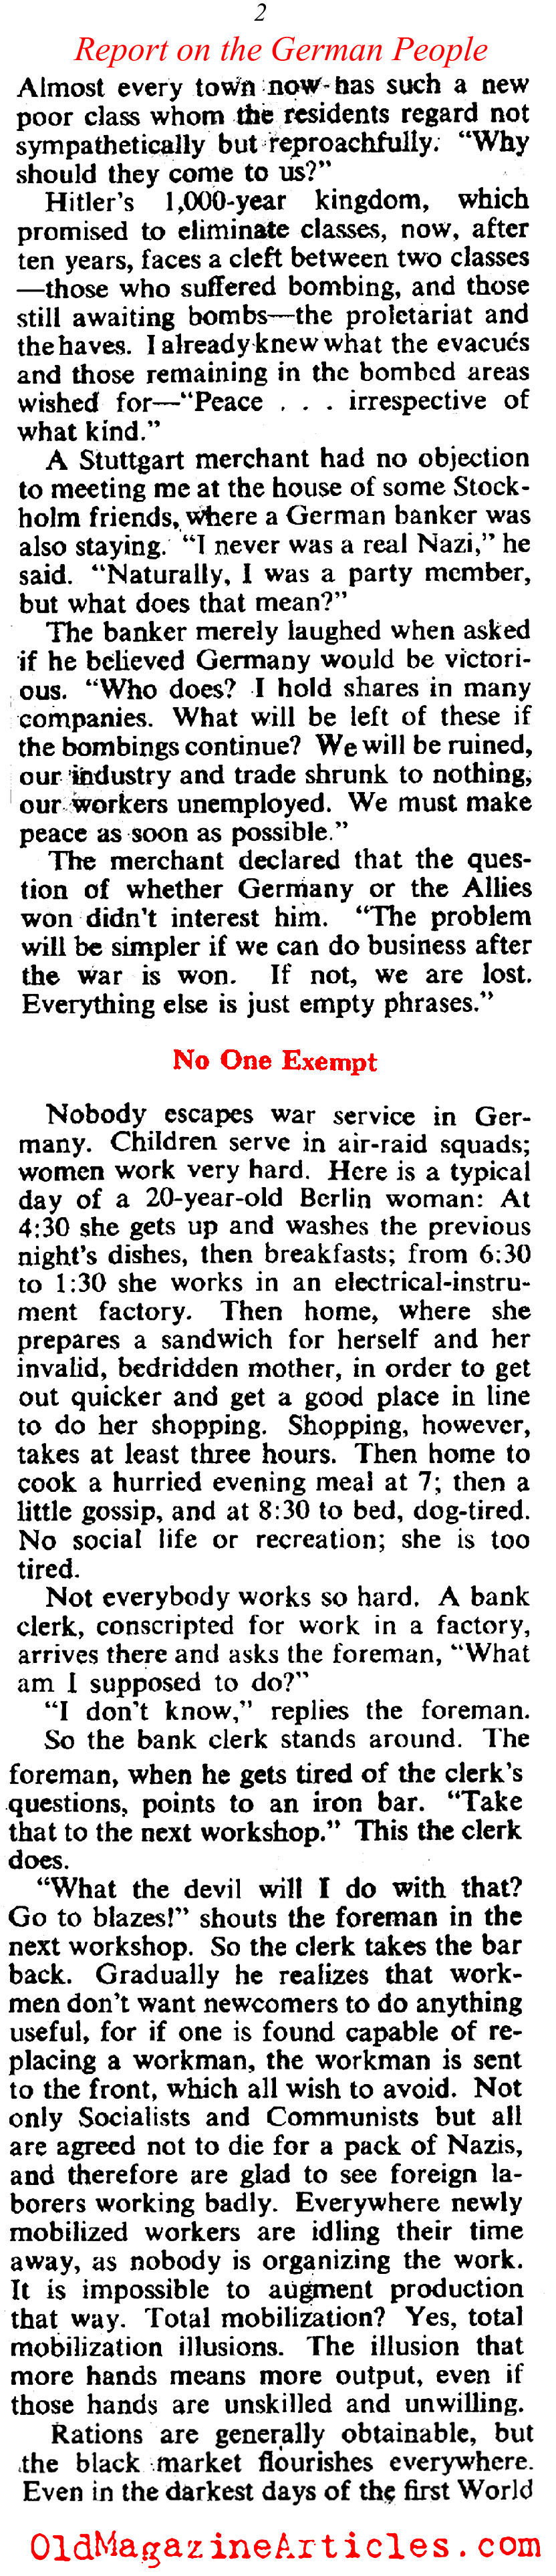 Life in W.W. II Germany (Collier's, 1943)